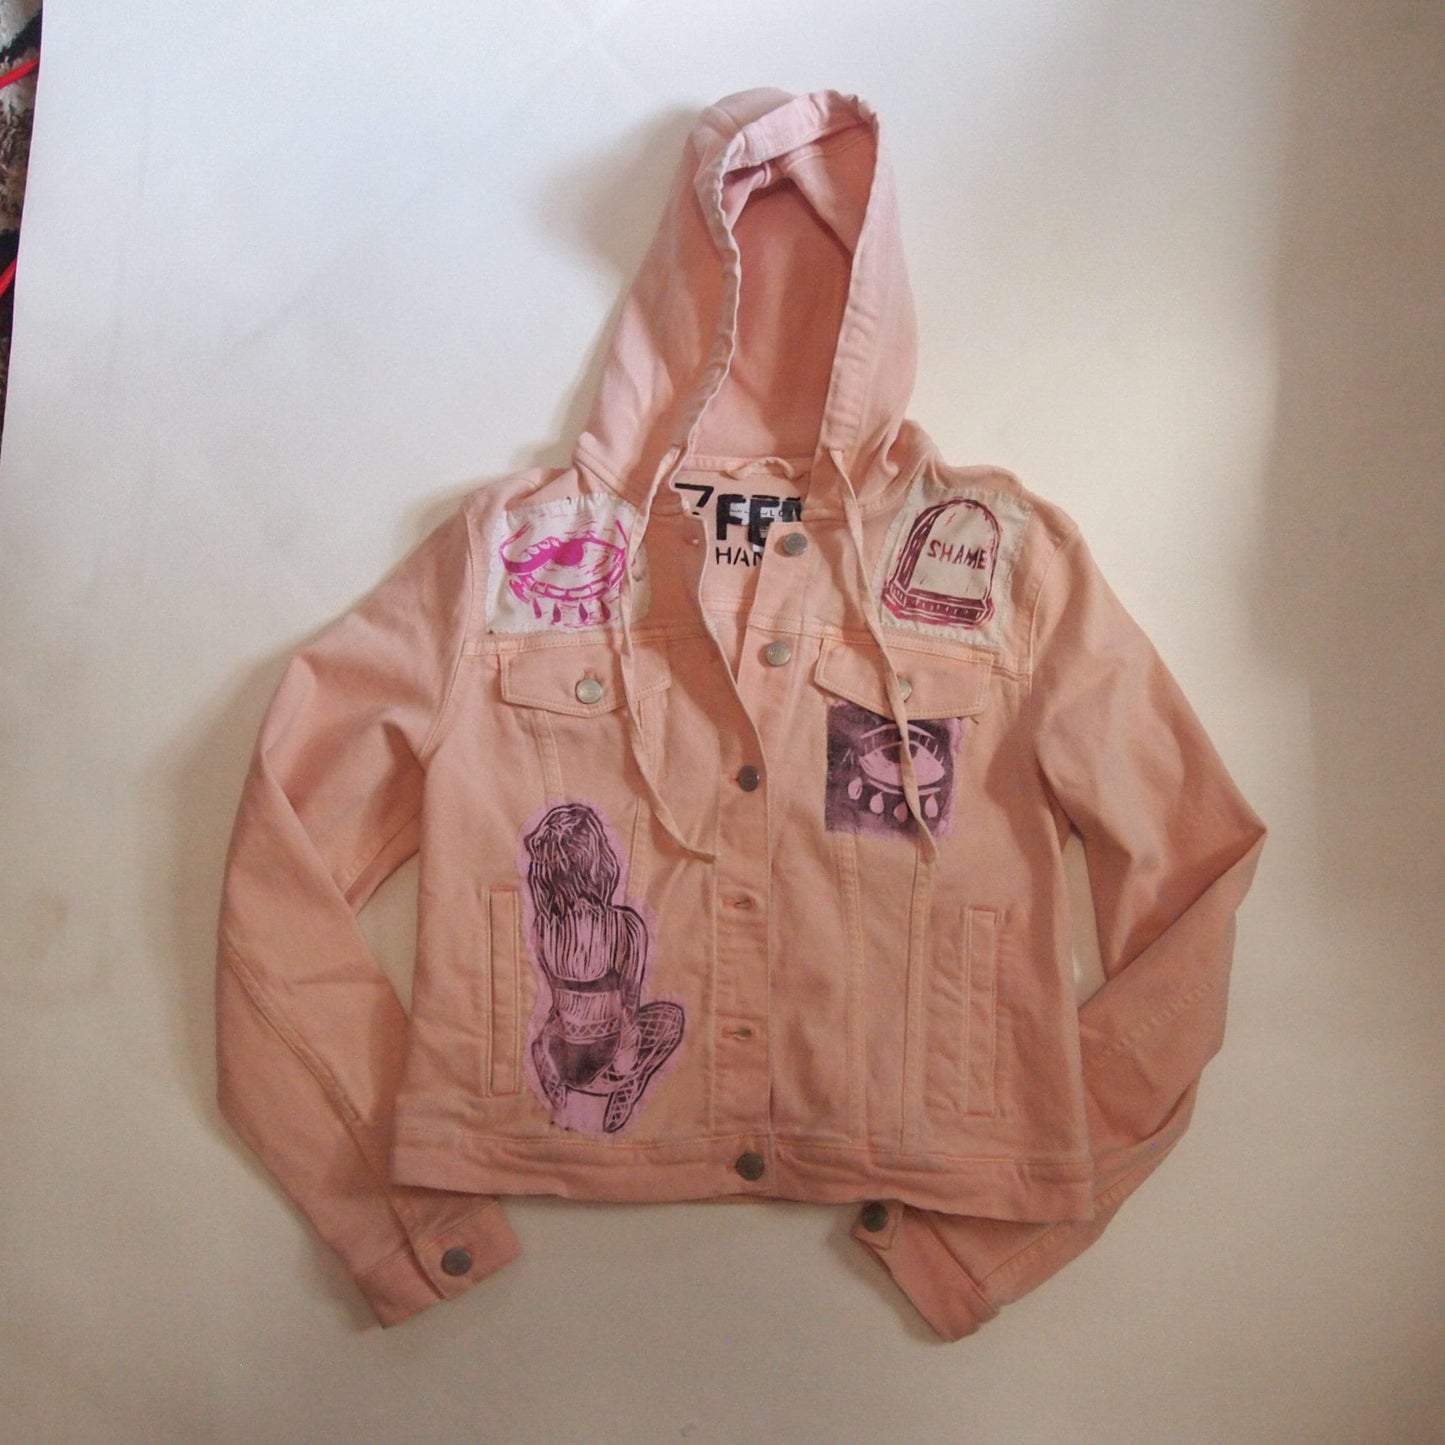 SM Custom Patched Pastel Pink/Coral Hooded Denim Jacket Raccoon Art 1 of 1 Handmade